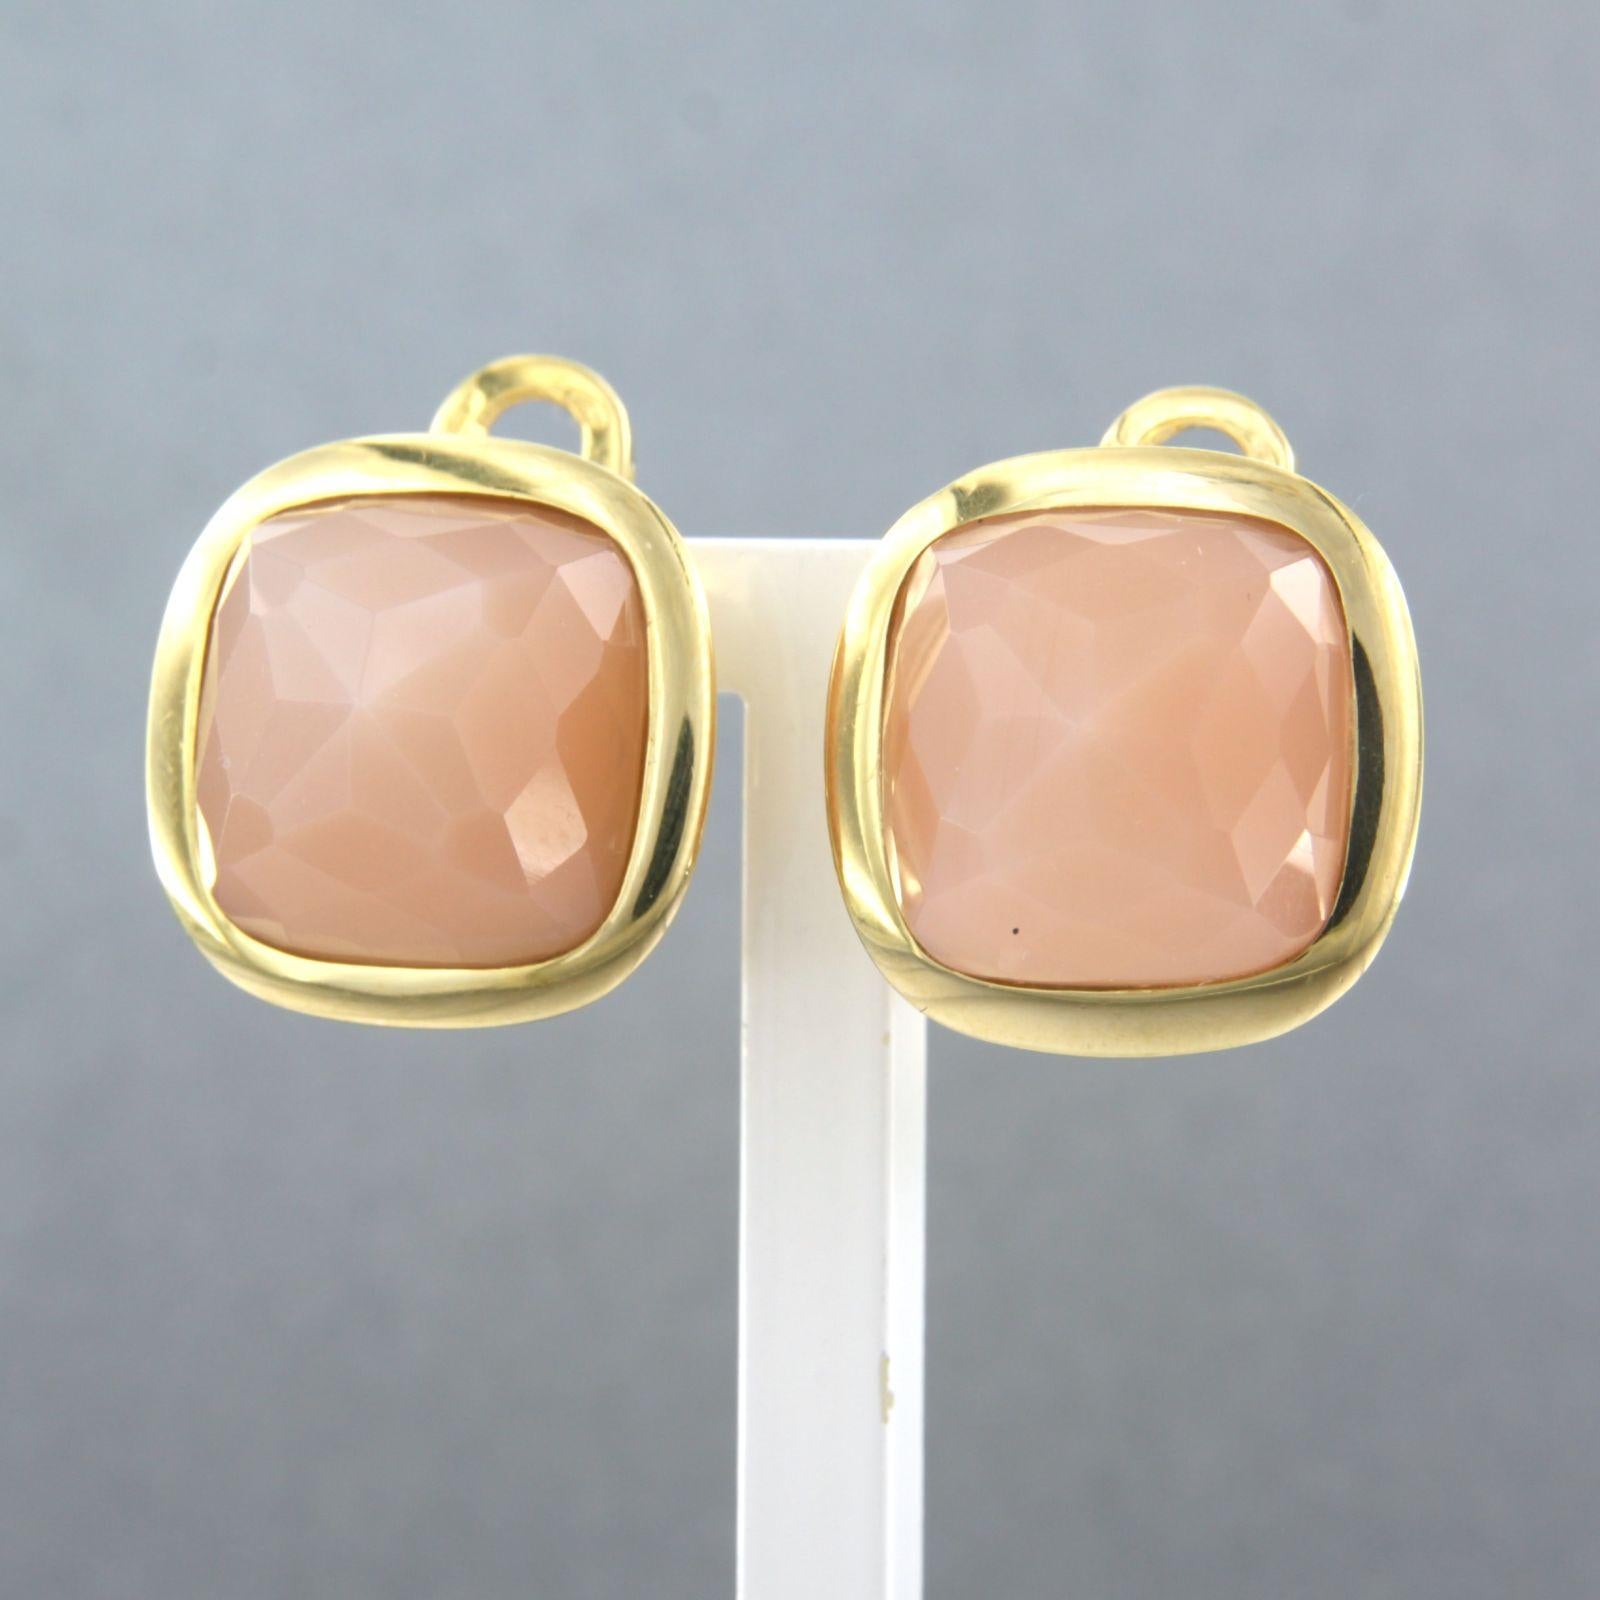 Rose Cut 18k yellow gold ear clips set with pink quartz - size 1.8 cm x 1.8 cm For Sale